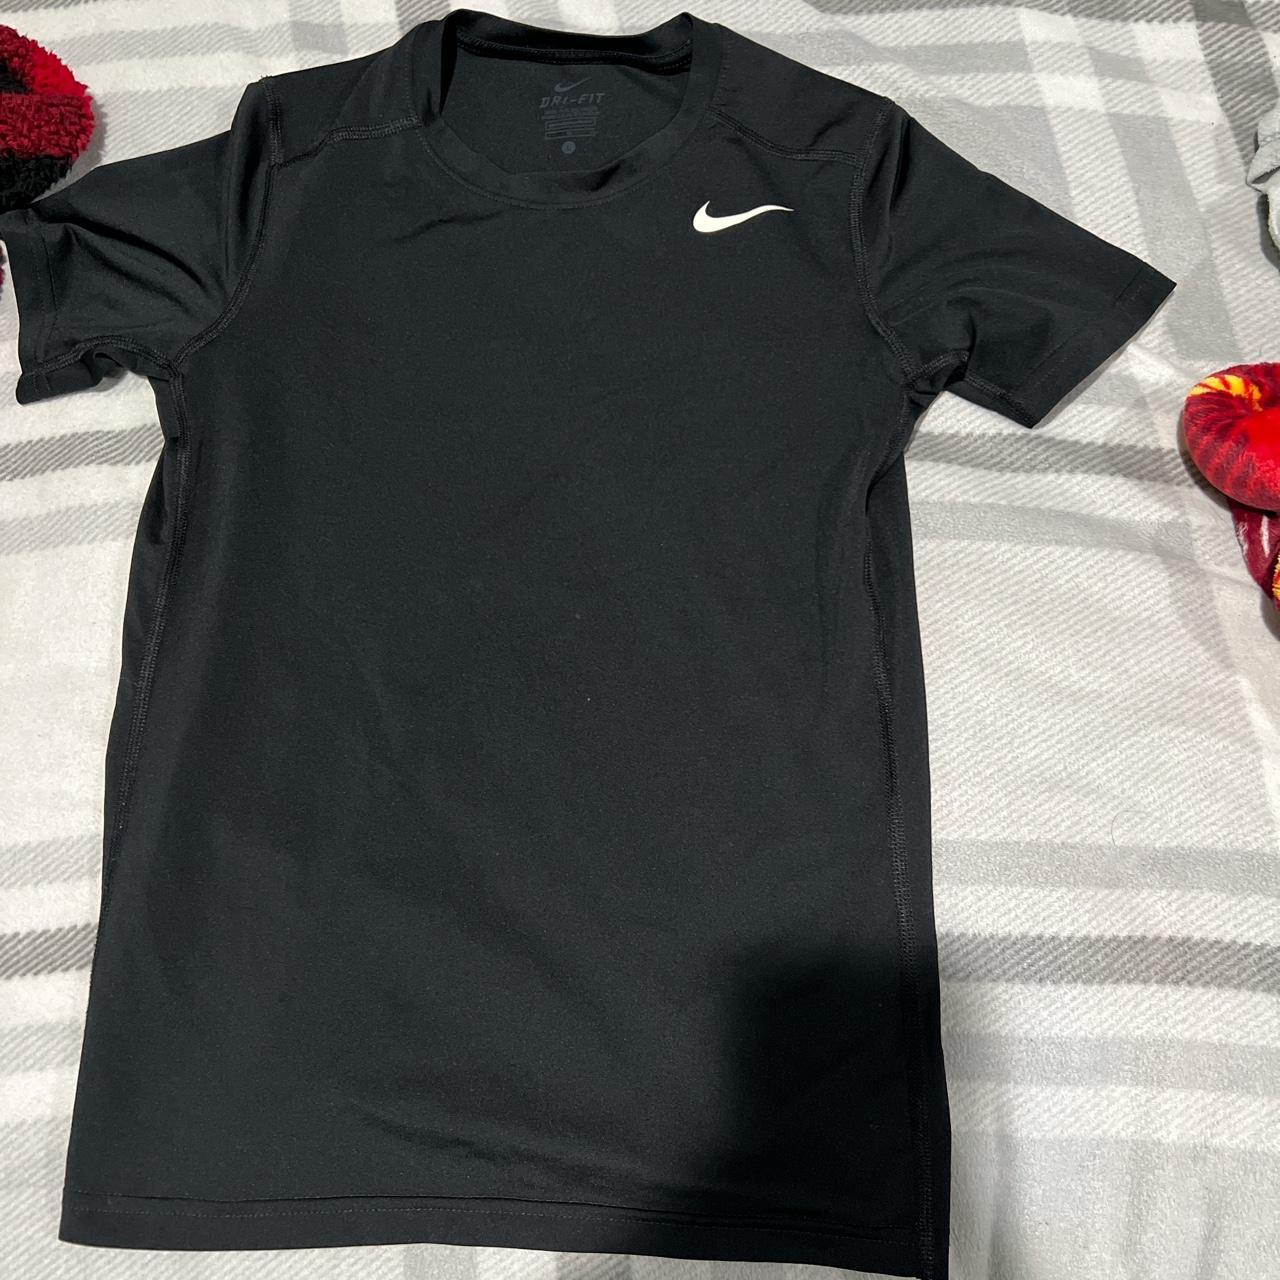 Size large Nike pro shirt Black - Depop